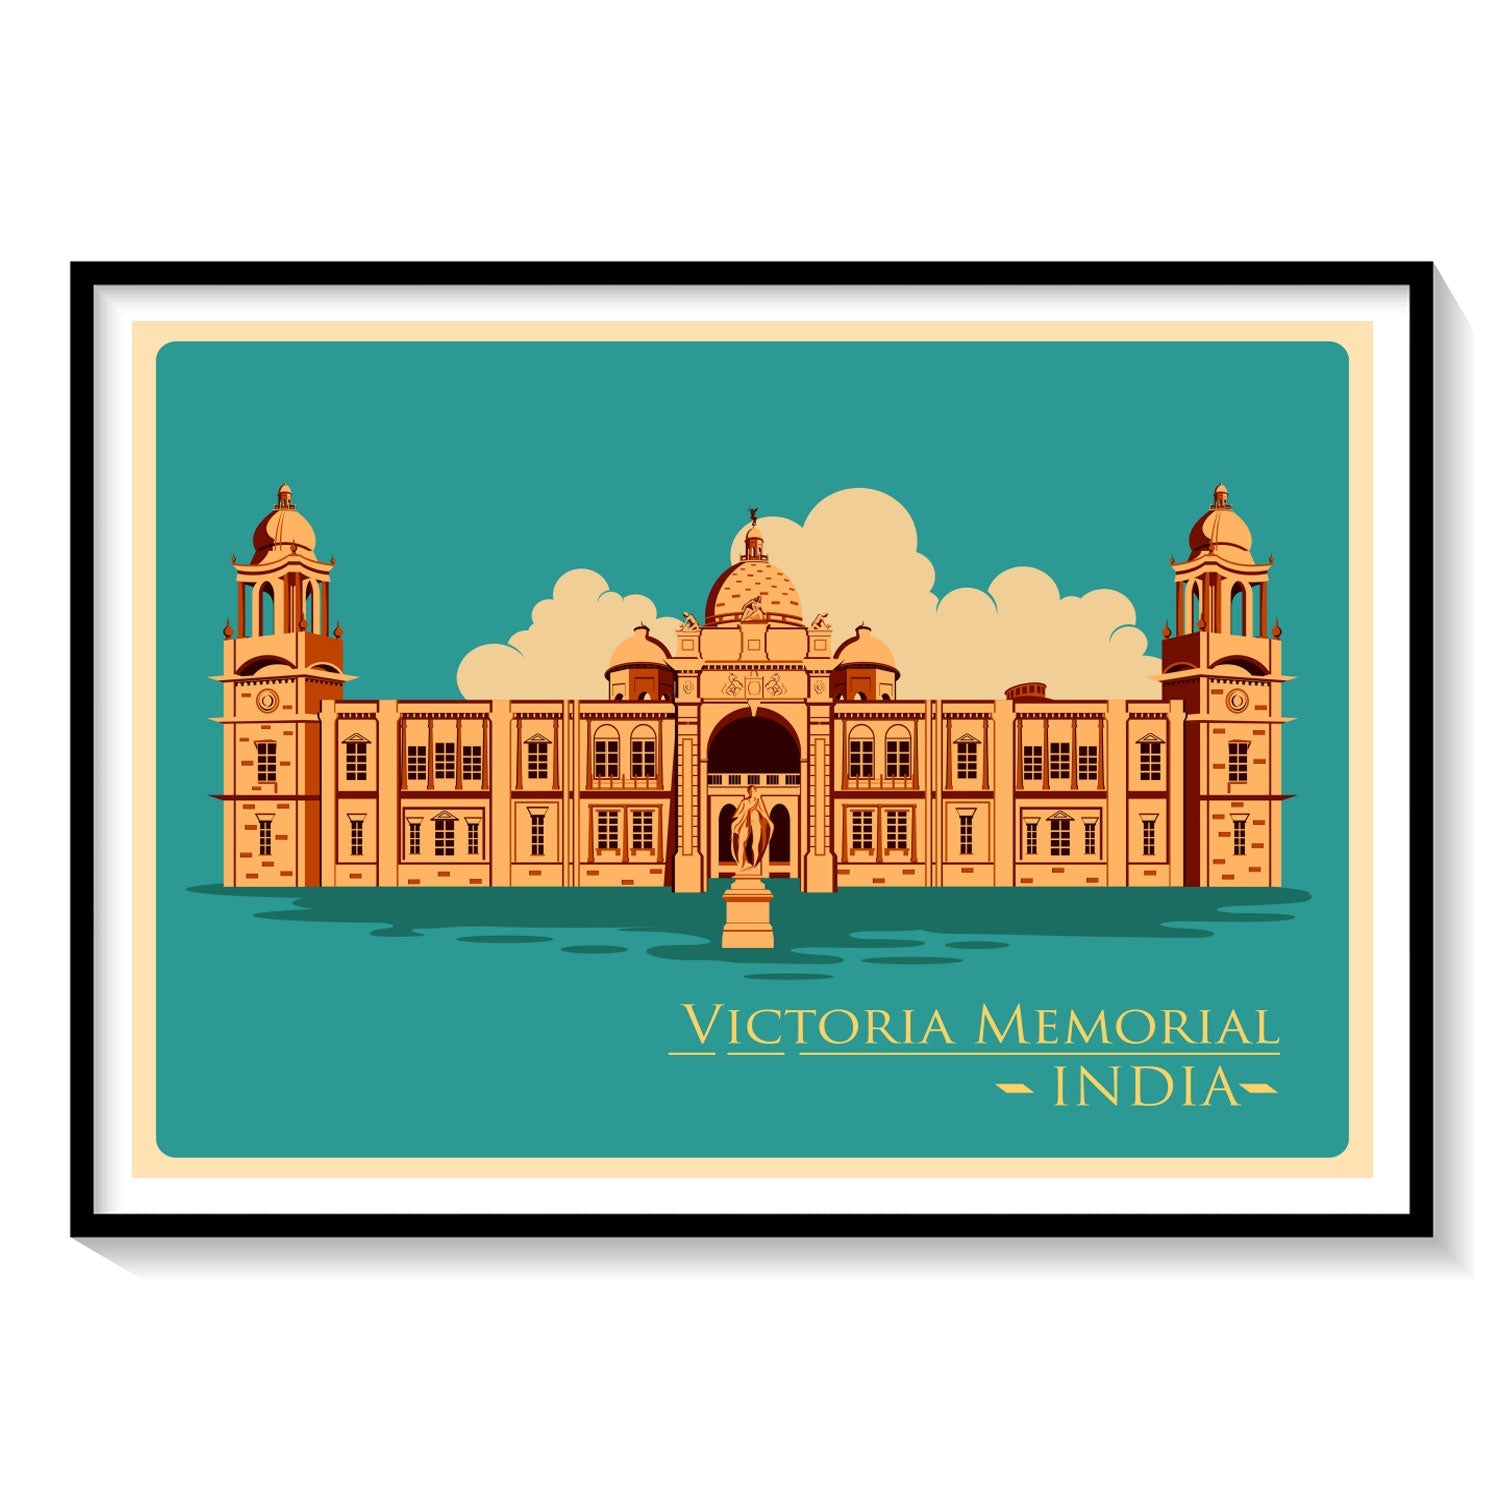 Victoria memorial Kolkata image converted to monochrome line drawing Poster  by Milind Ketkar - Fine Art America